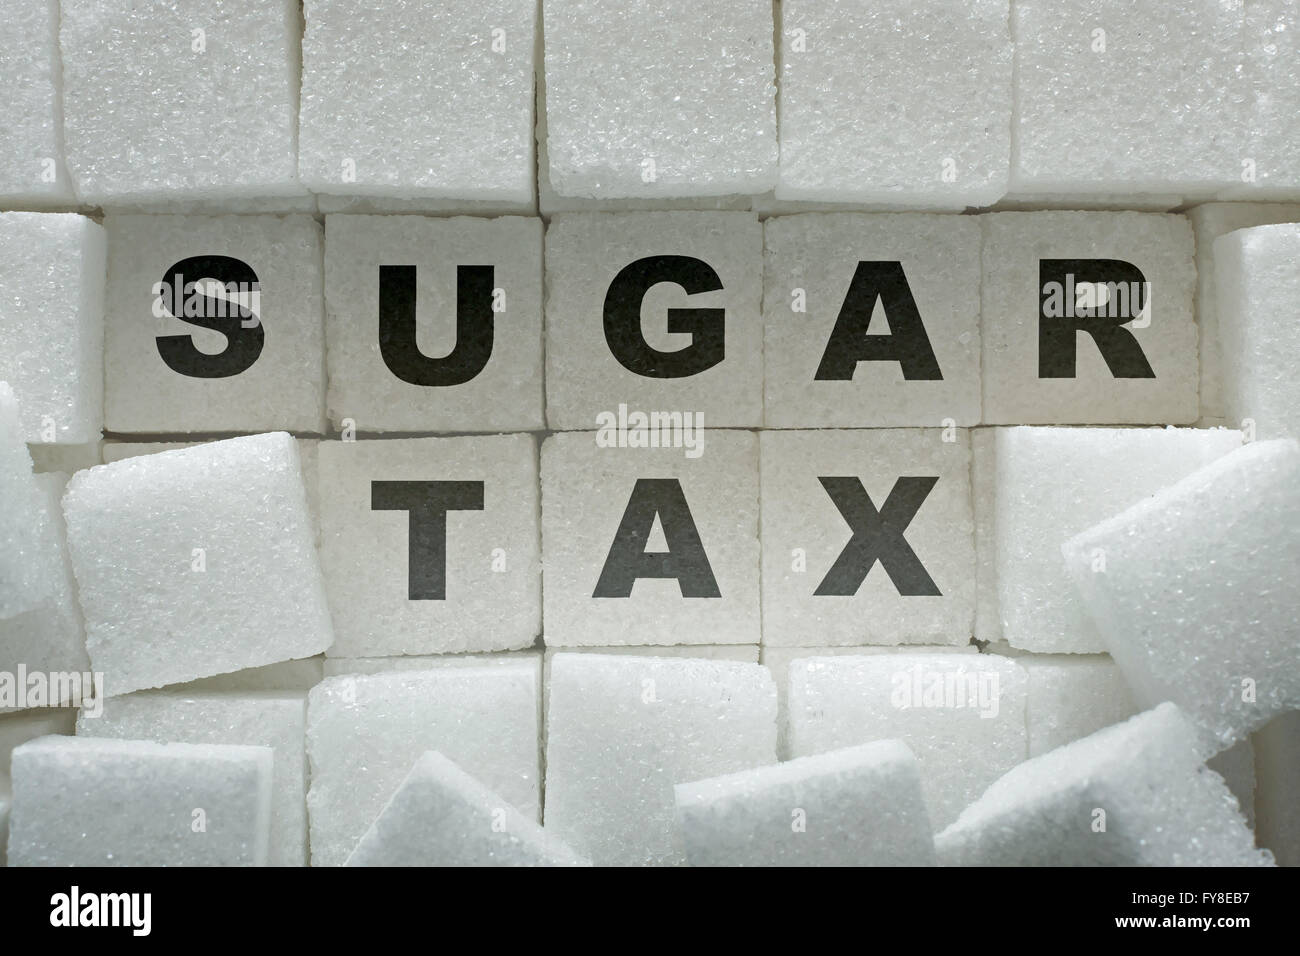 Sugar cubes and 'sugar tax' inscription Stock Photo